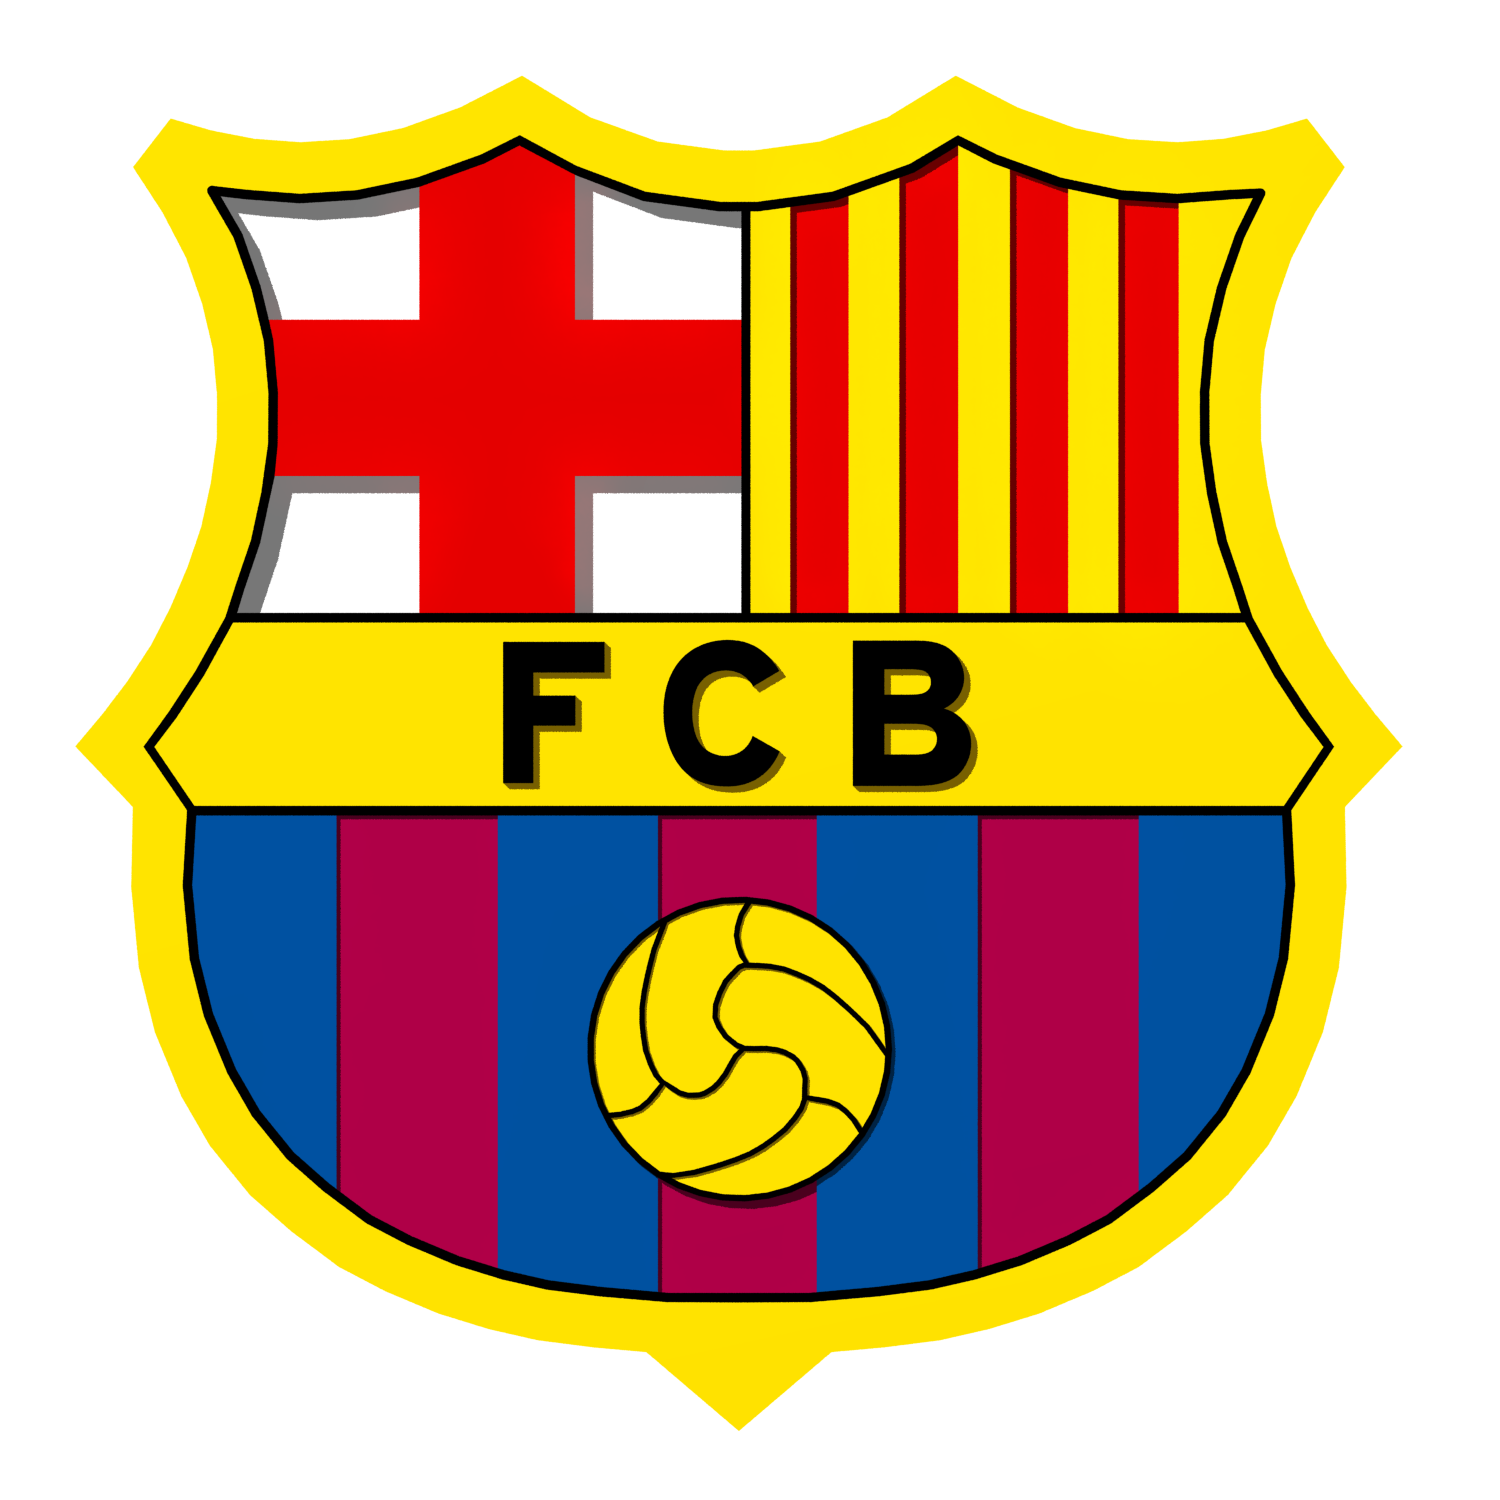 Fc Barca Logo Png - FC Barcelona - Wikipedia bahasa Indonesia